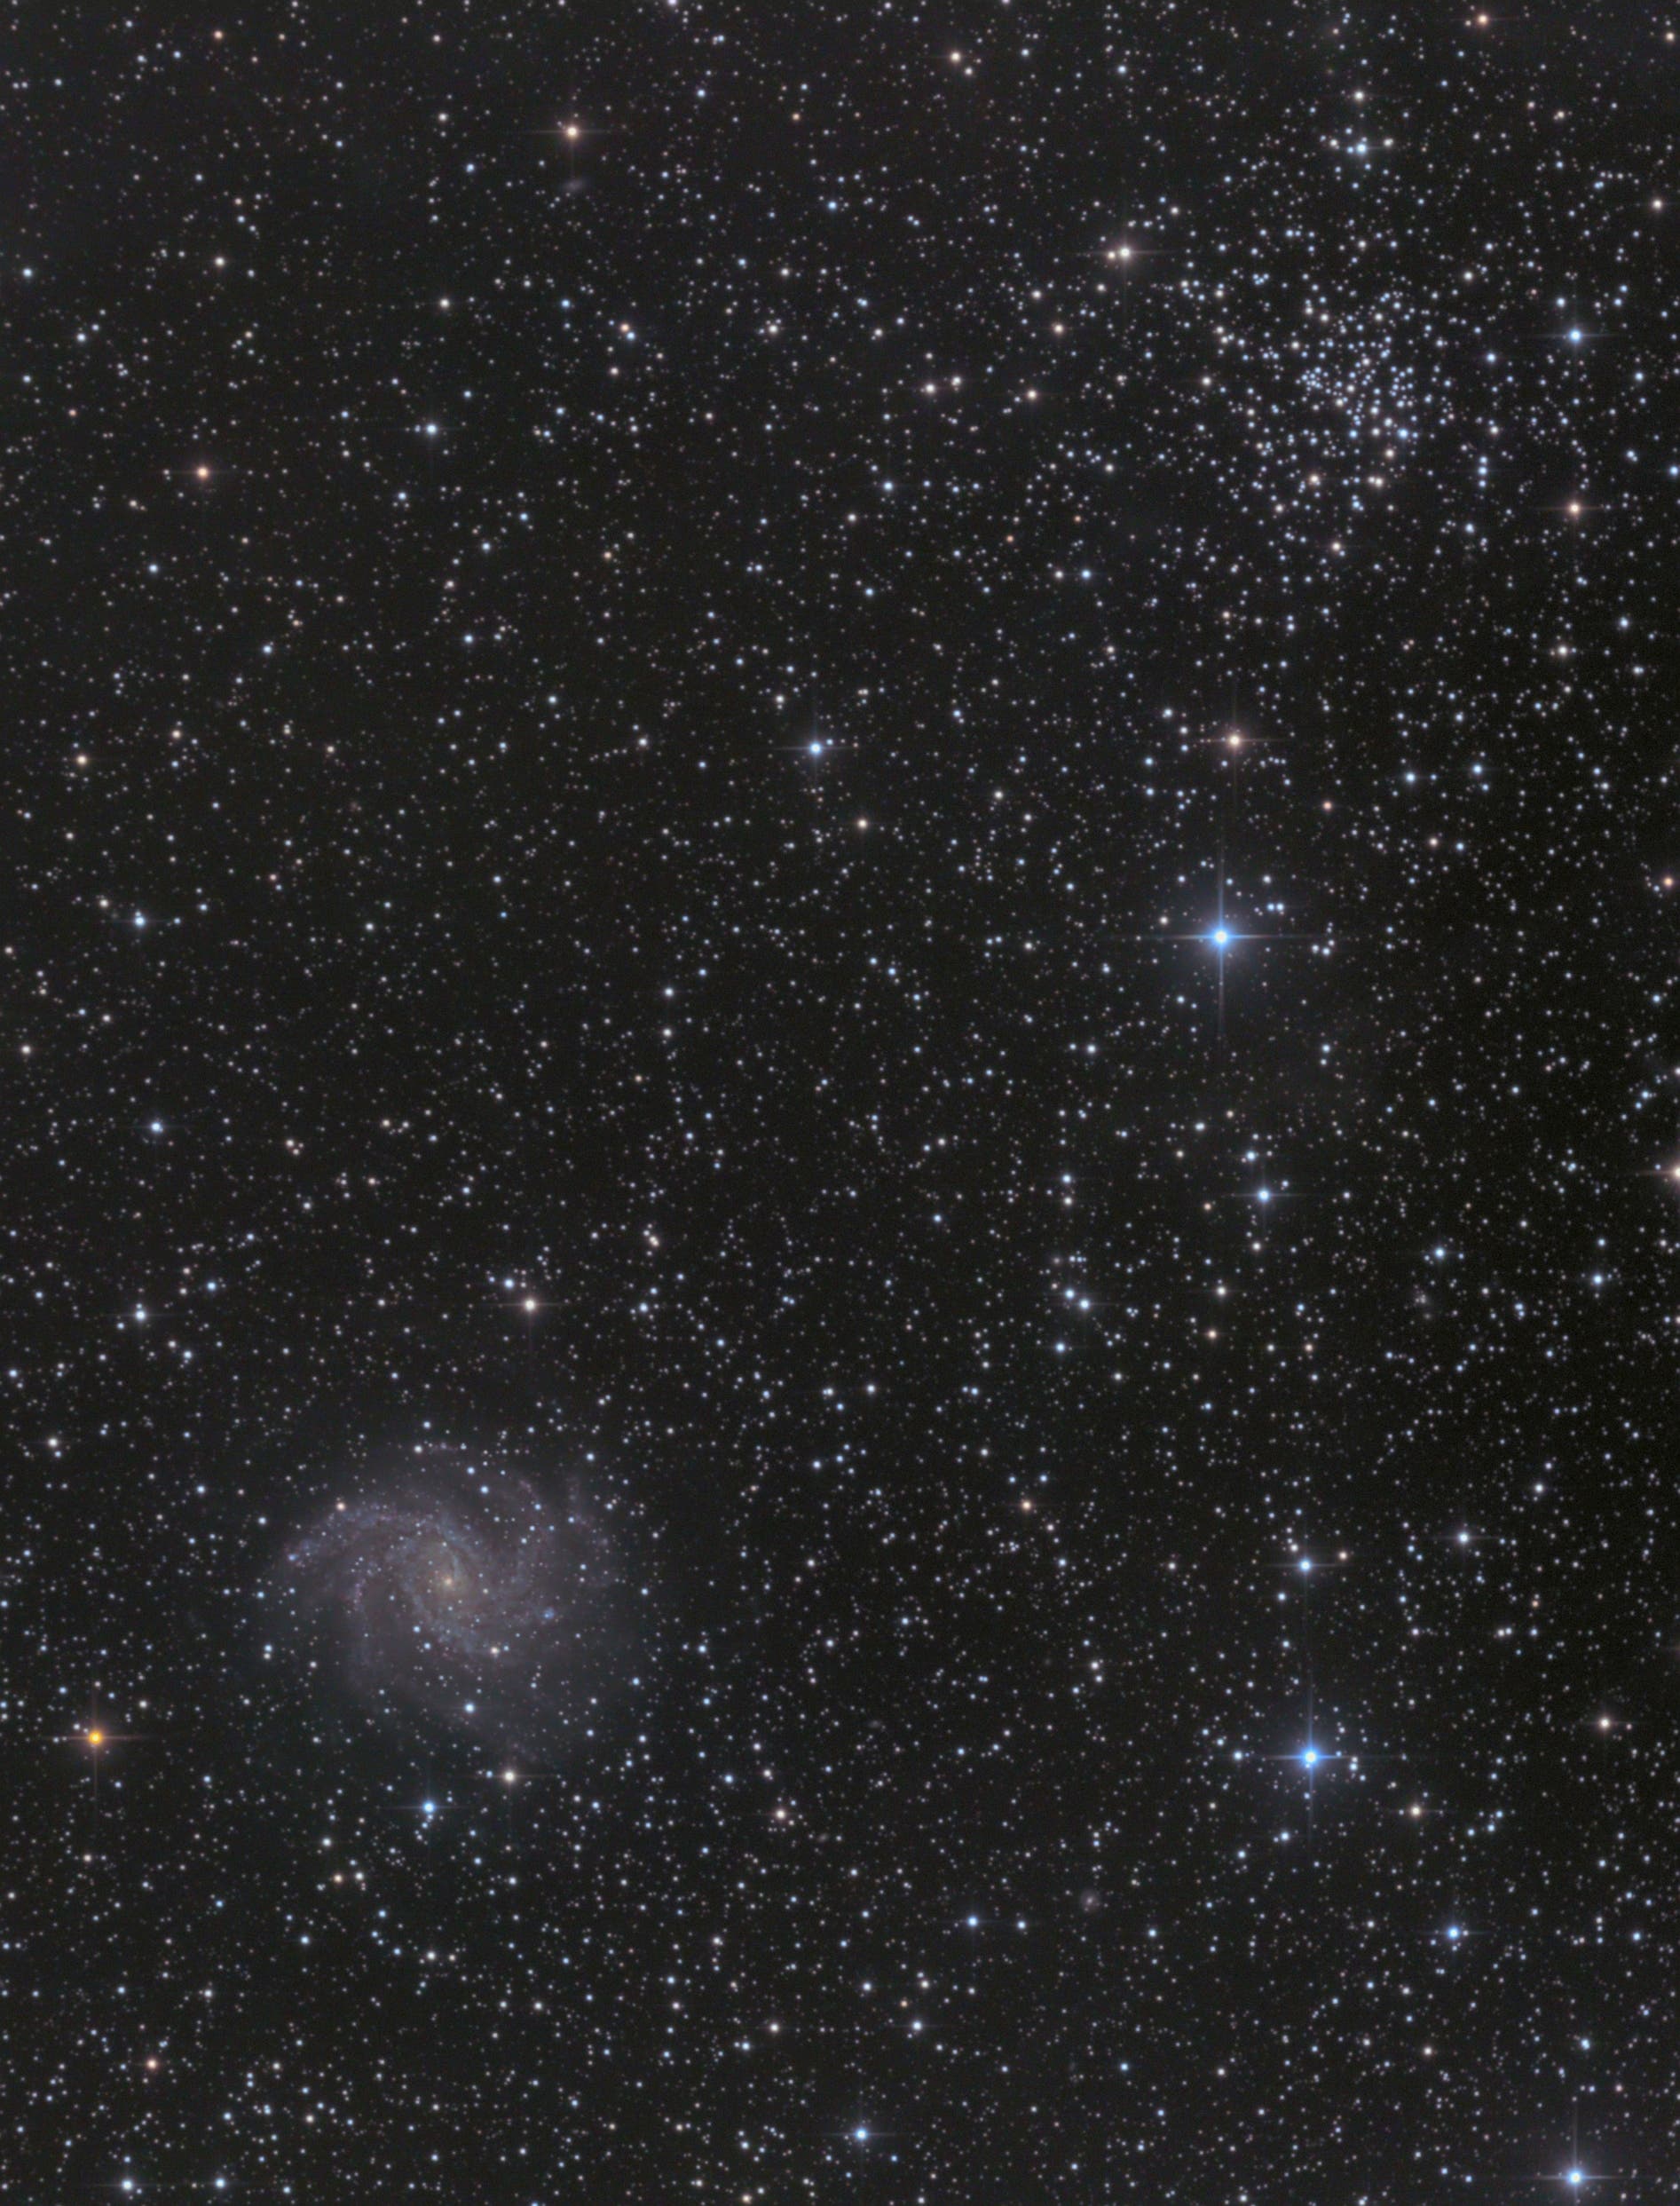 Supernova SN 2017eaw in NGC 6946 + offener Sternhaufen NGC 6939